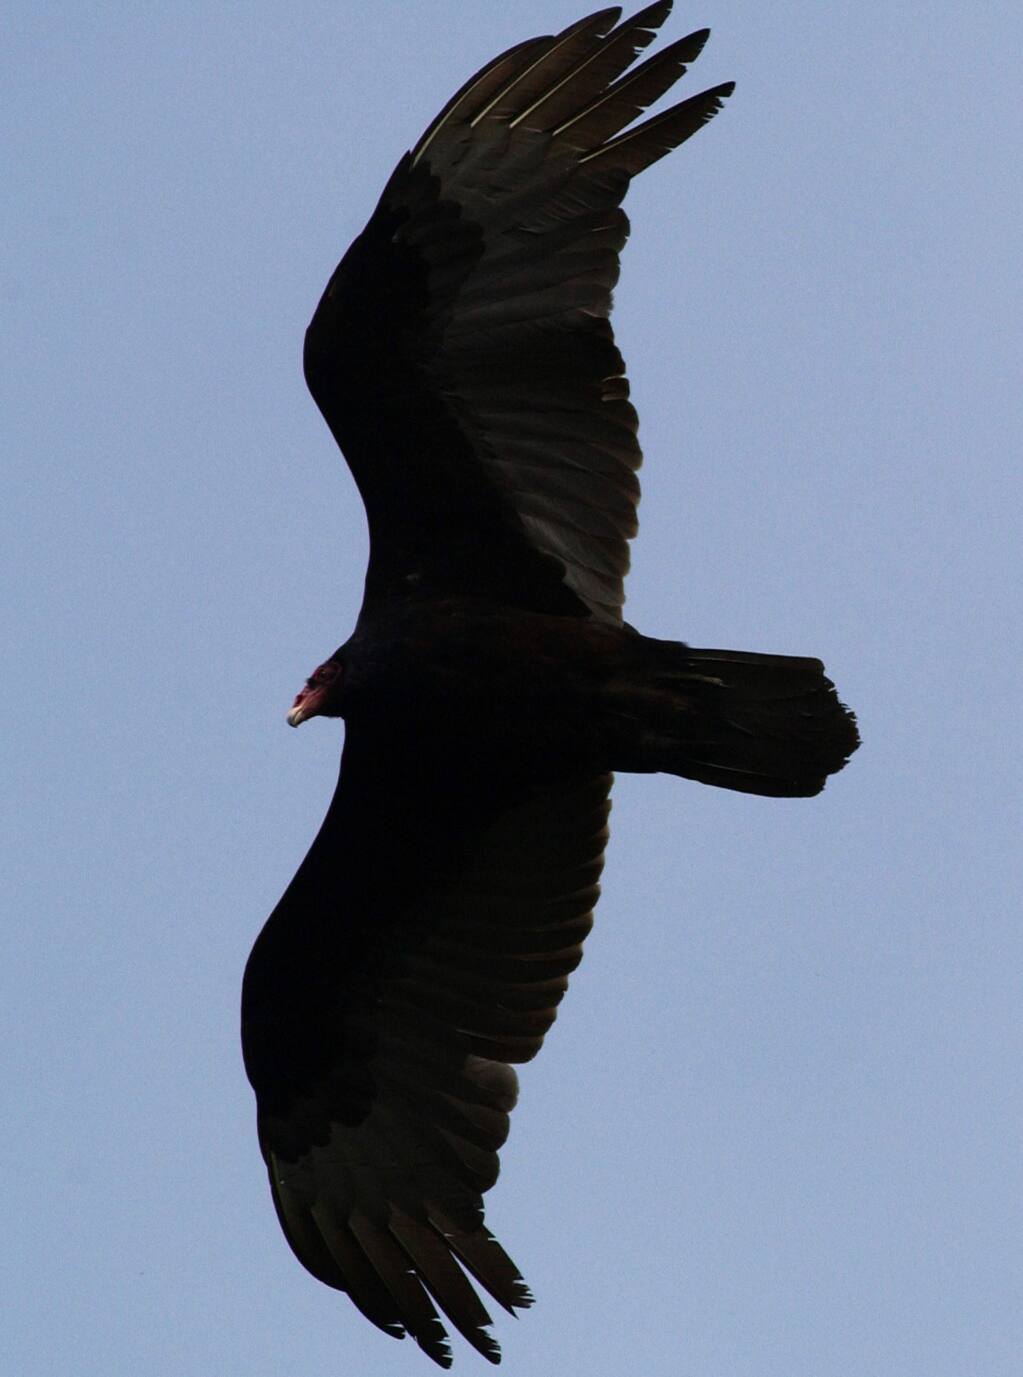 PHOTO: 1 by Crista Jeremiason / The Press Democrat, 2005-A turkey vulture above the Laguna de Santa Rosa.